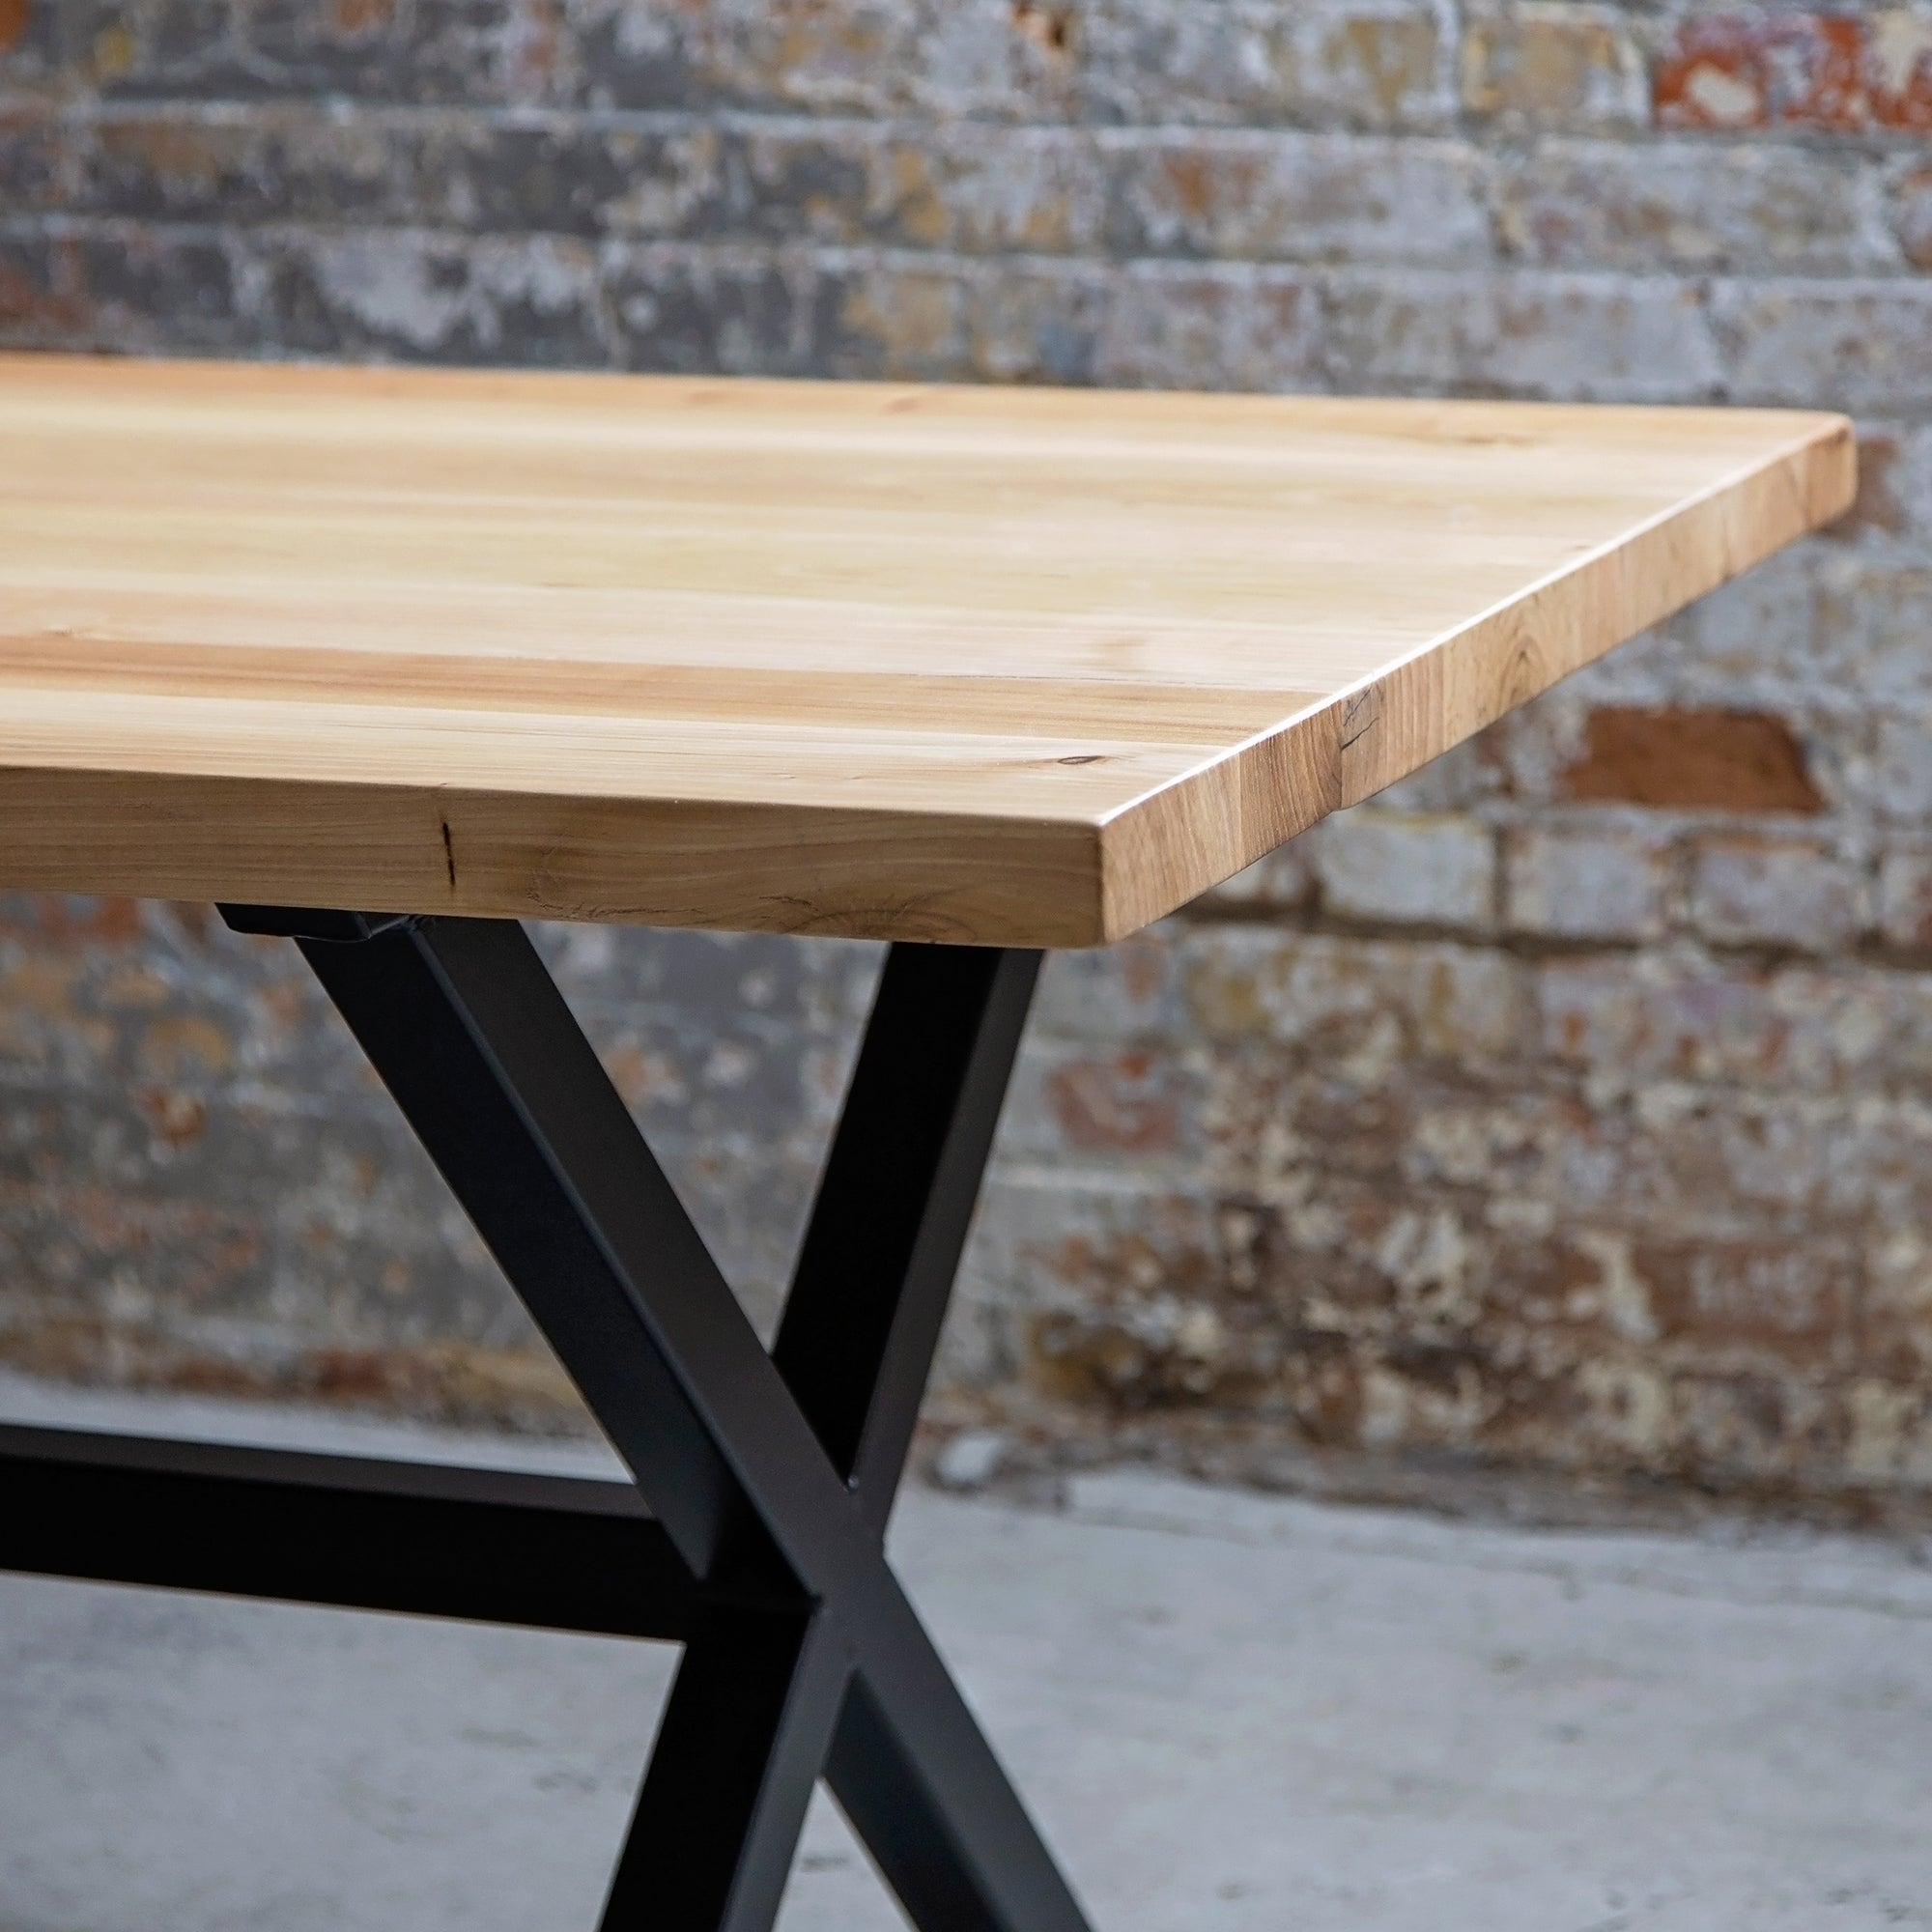 Custom Wood Tabletops - Made in USA - Dakota Timber Co.